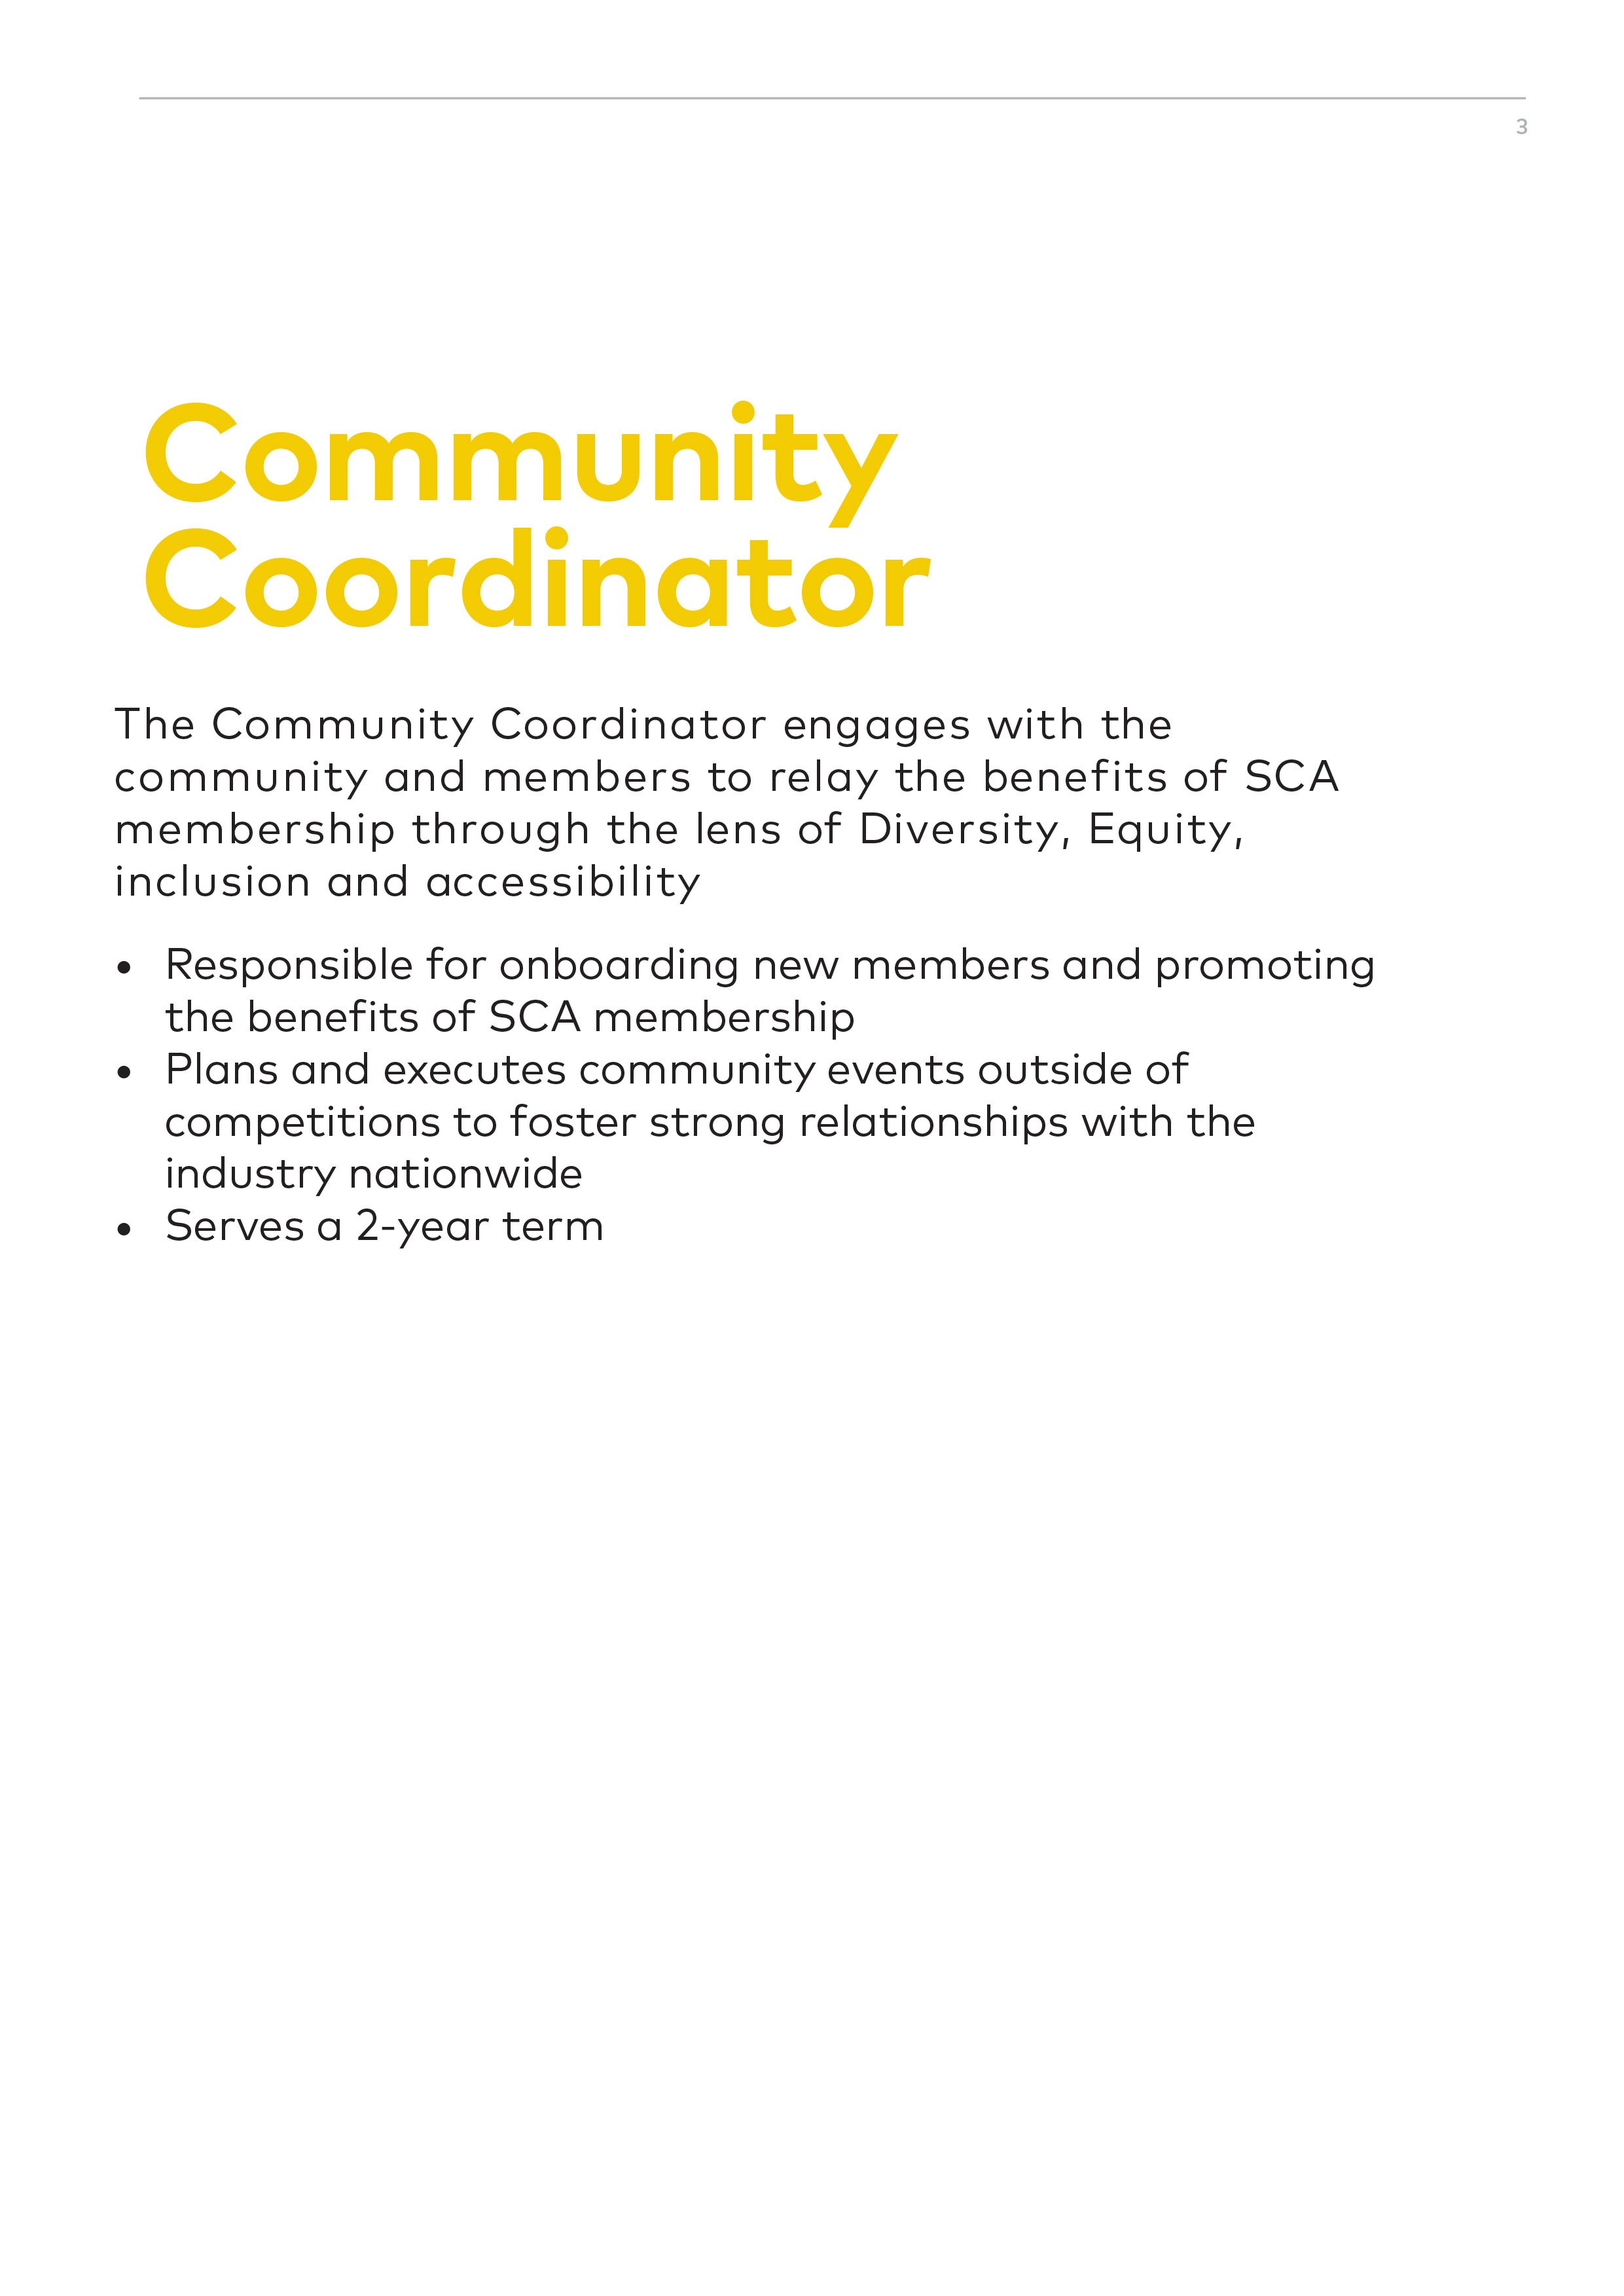 SCA_Canada_Chapter_Roles_Responsibilities_Community.jpg